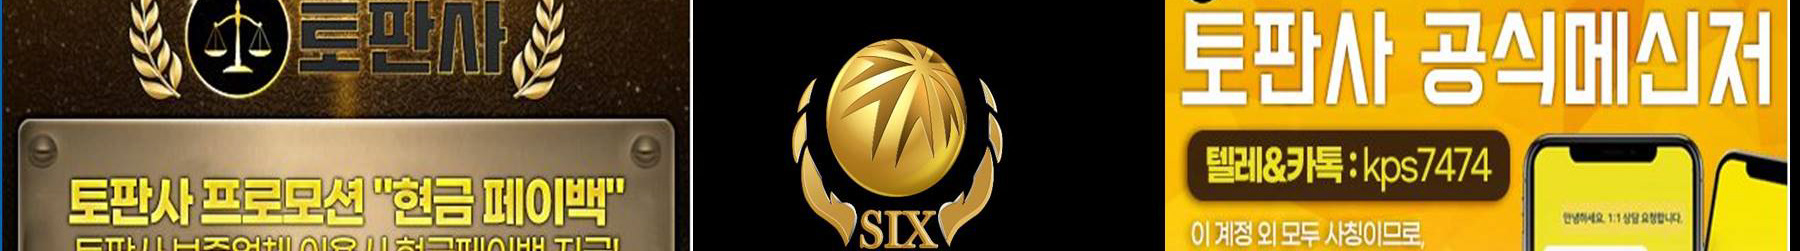 sixzone 4894's profile banner